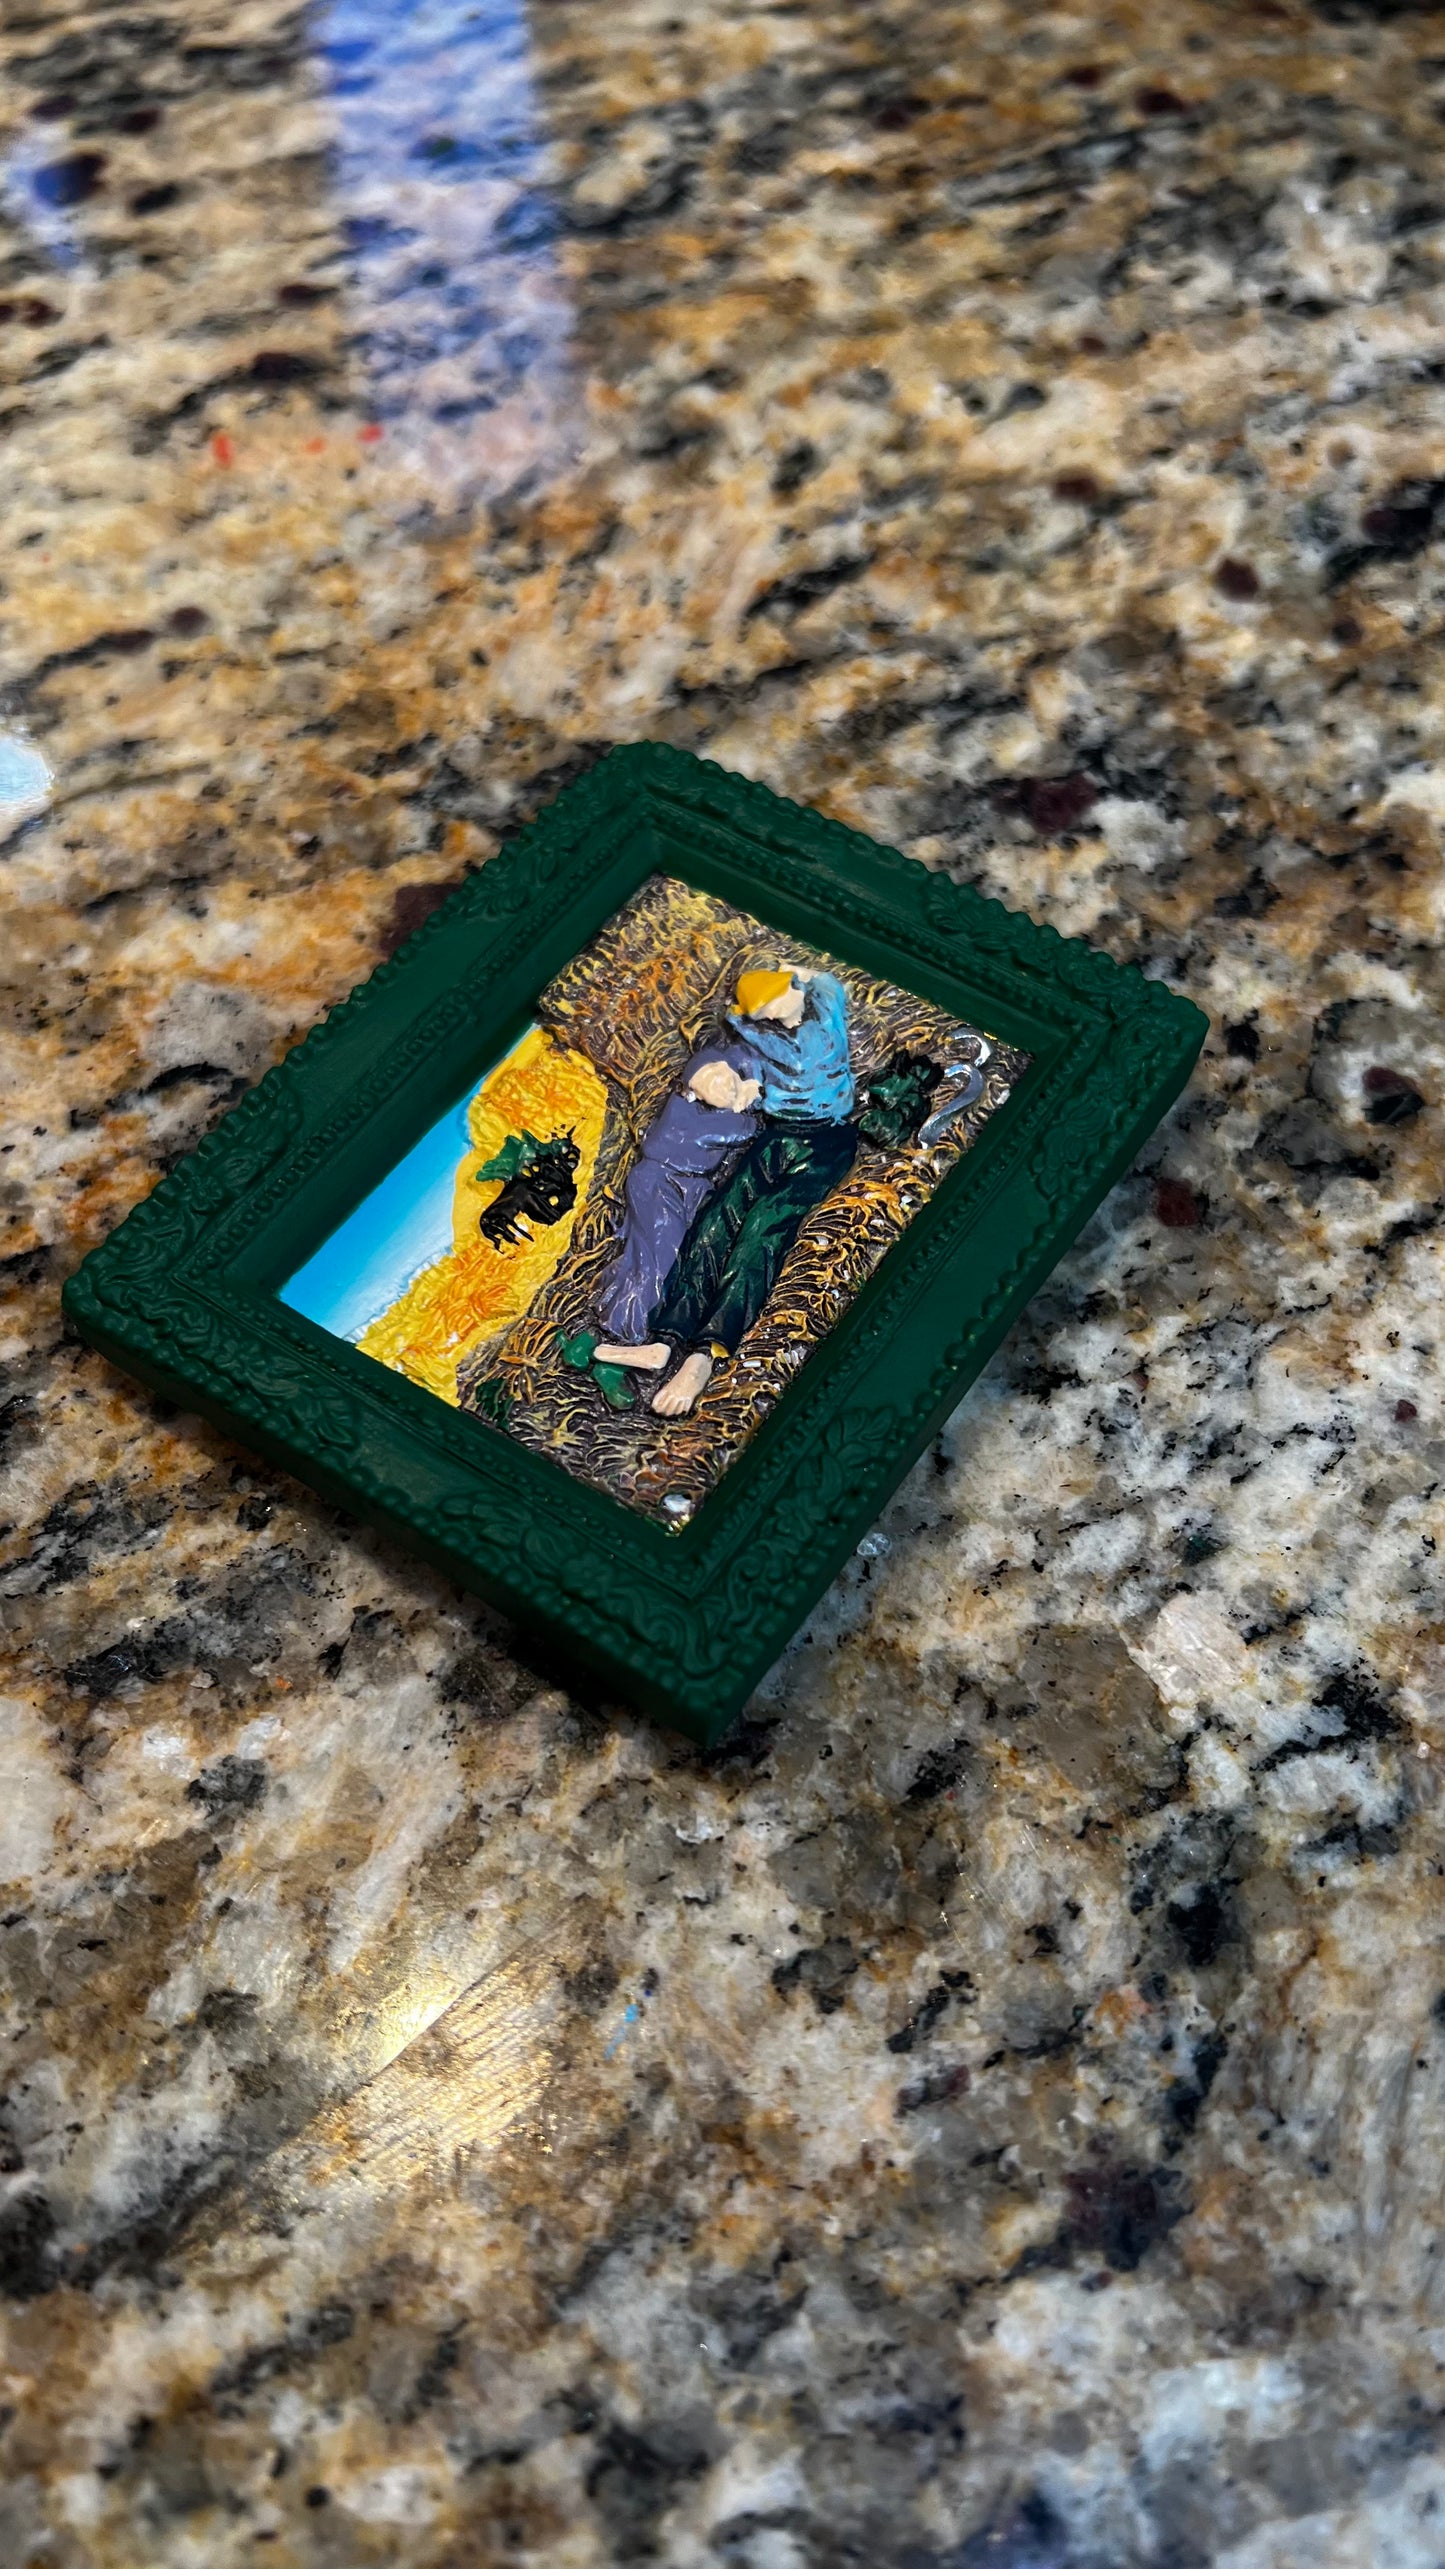 The Siesta Miniature Magnet